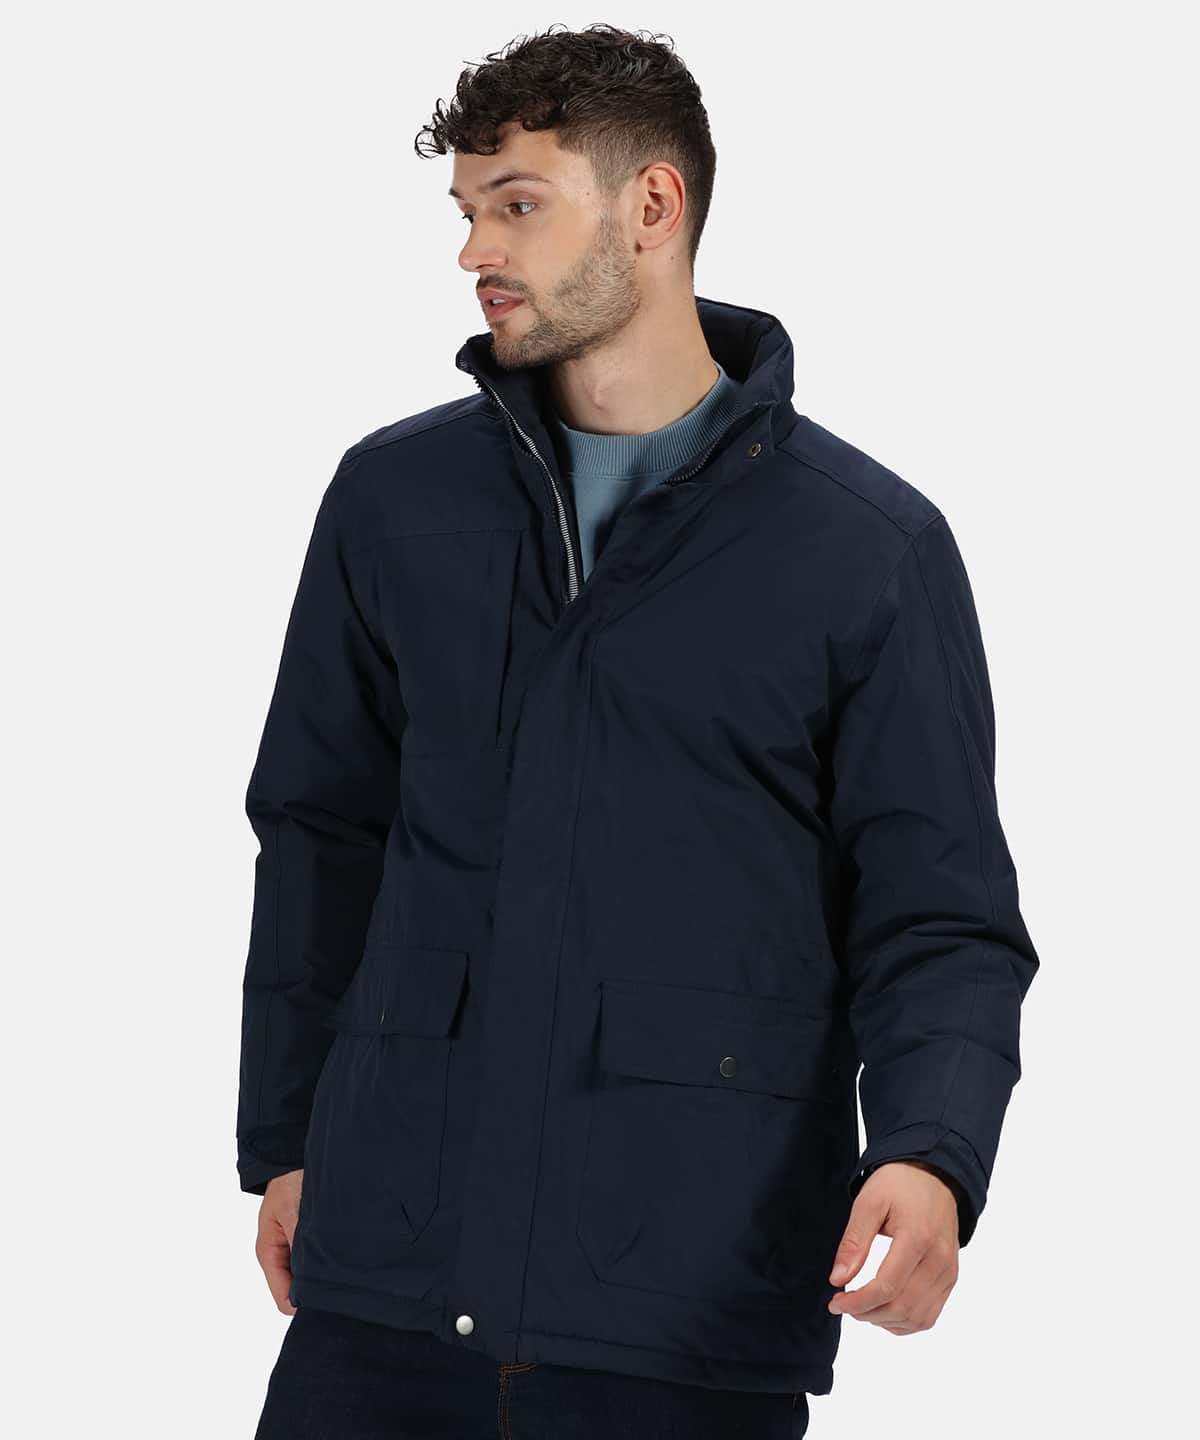 Regatta Darby III Insulated Jacket - Essential Workwear